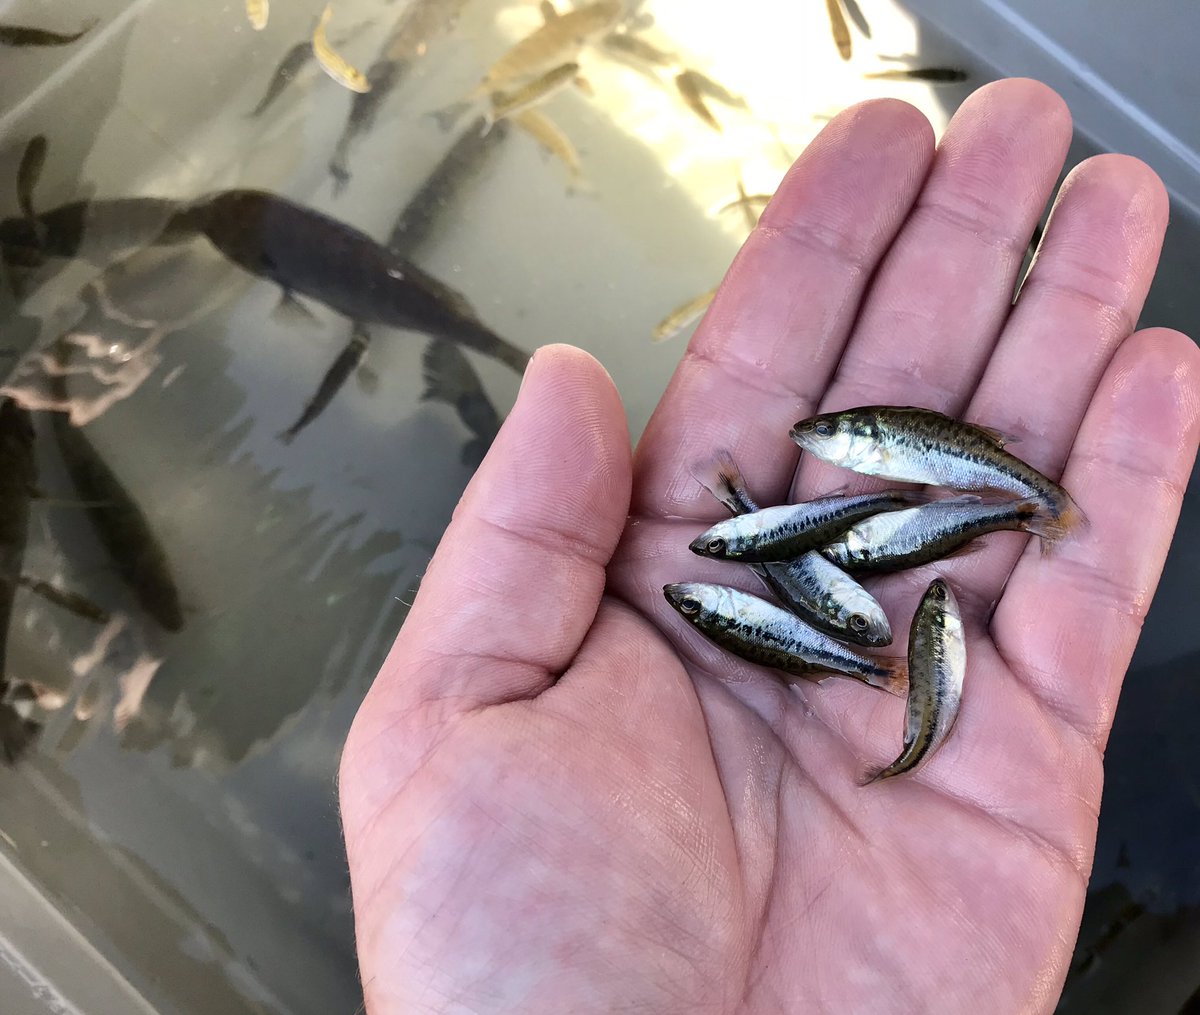 Brad Utrup on X: Mini fyke net haul of baby Largemouth Bass from